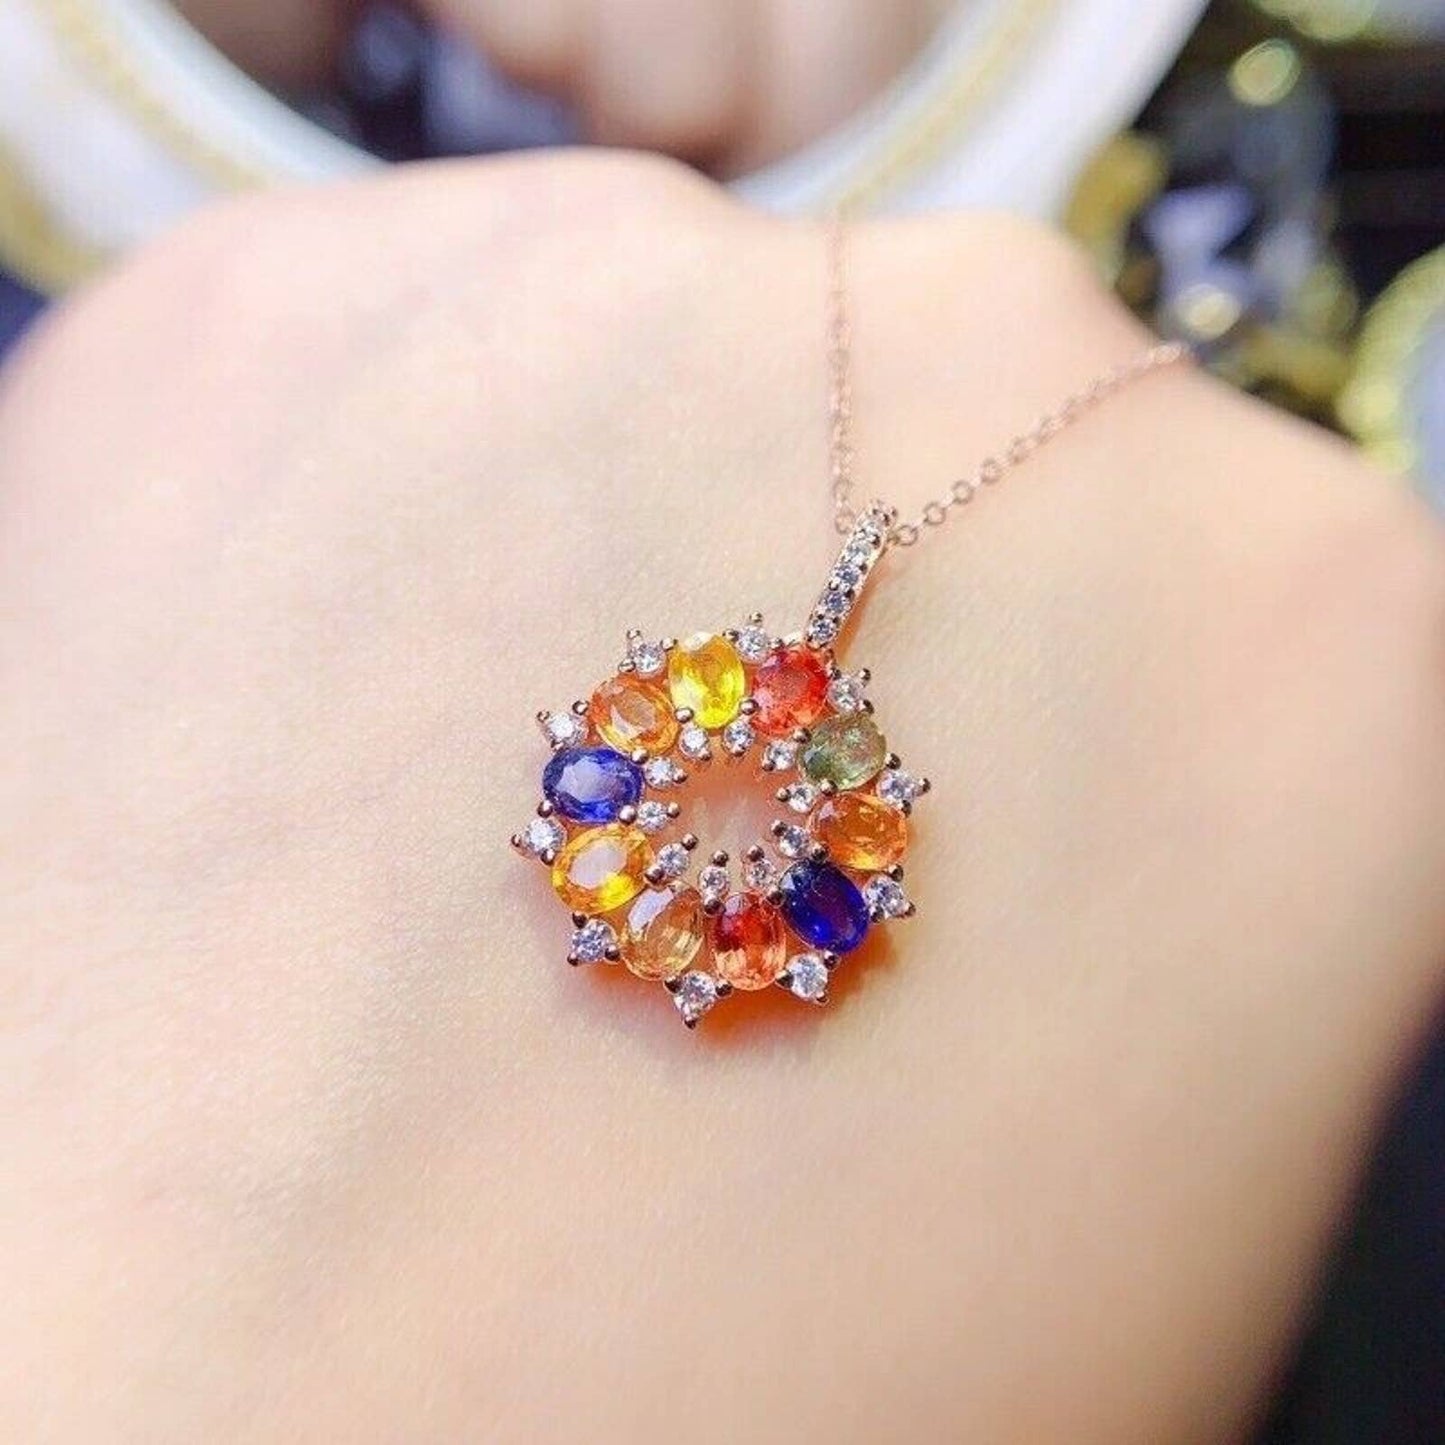 Colorful Sapphire Clavicle Necklace Pendant, 3x4mm Genuine Sapphire Pendant